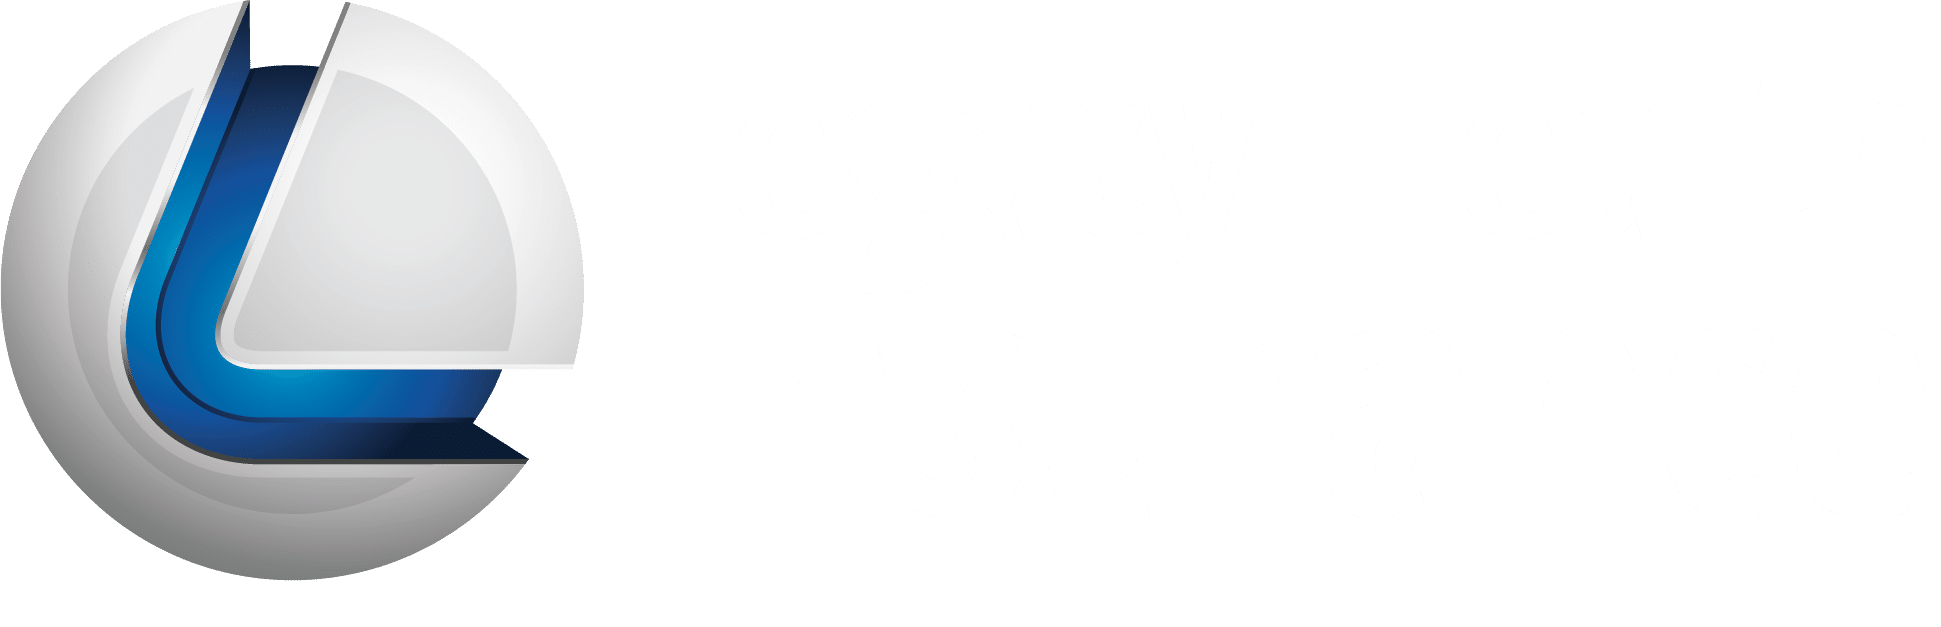 Legacy Health Insurance